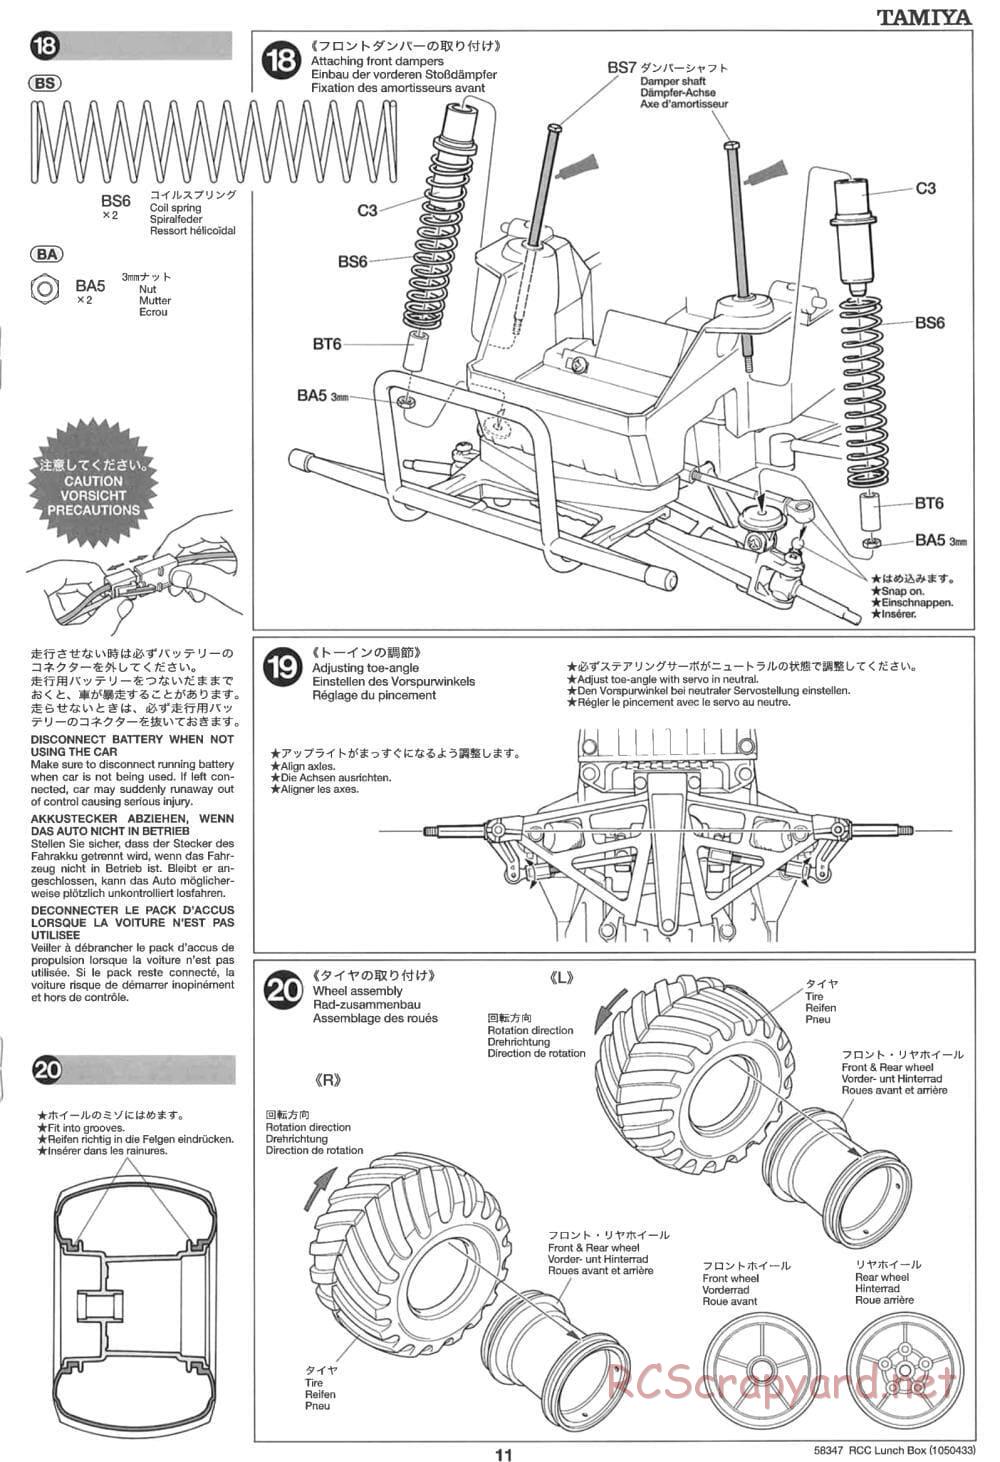 Tamiya - Vanessas Lunchbox - CW-01 Chassis - Manual - Page 11